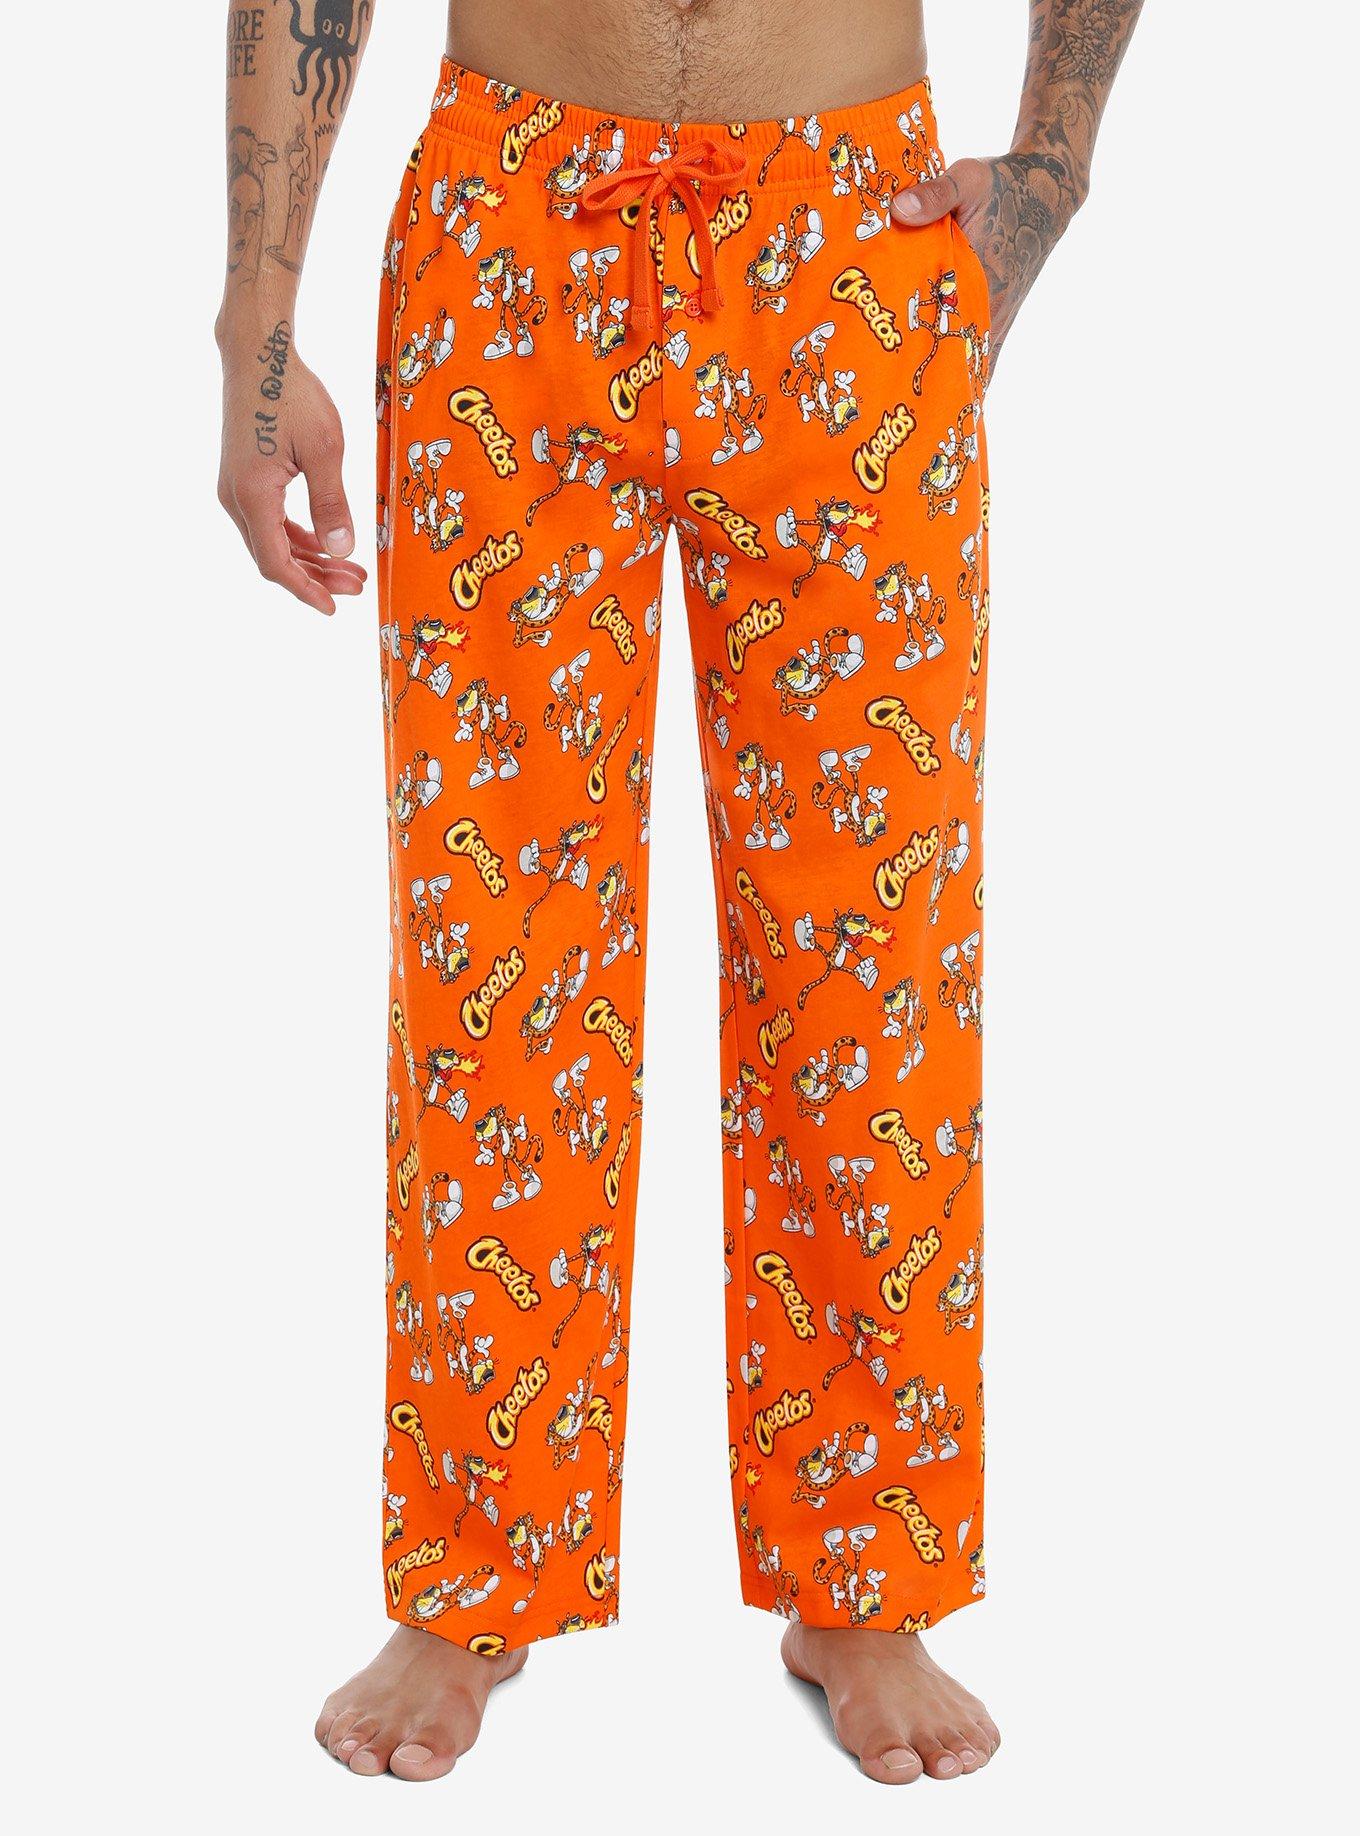 Cheetos Chester Cheetah Pajama Pants, ORANGE, hi-res